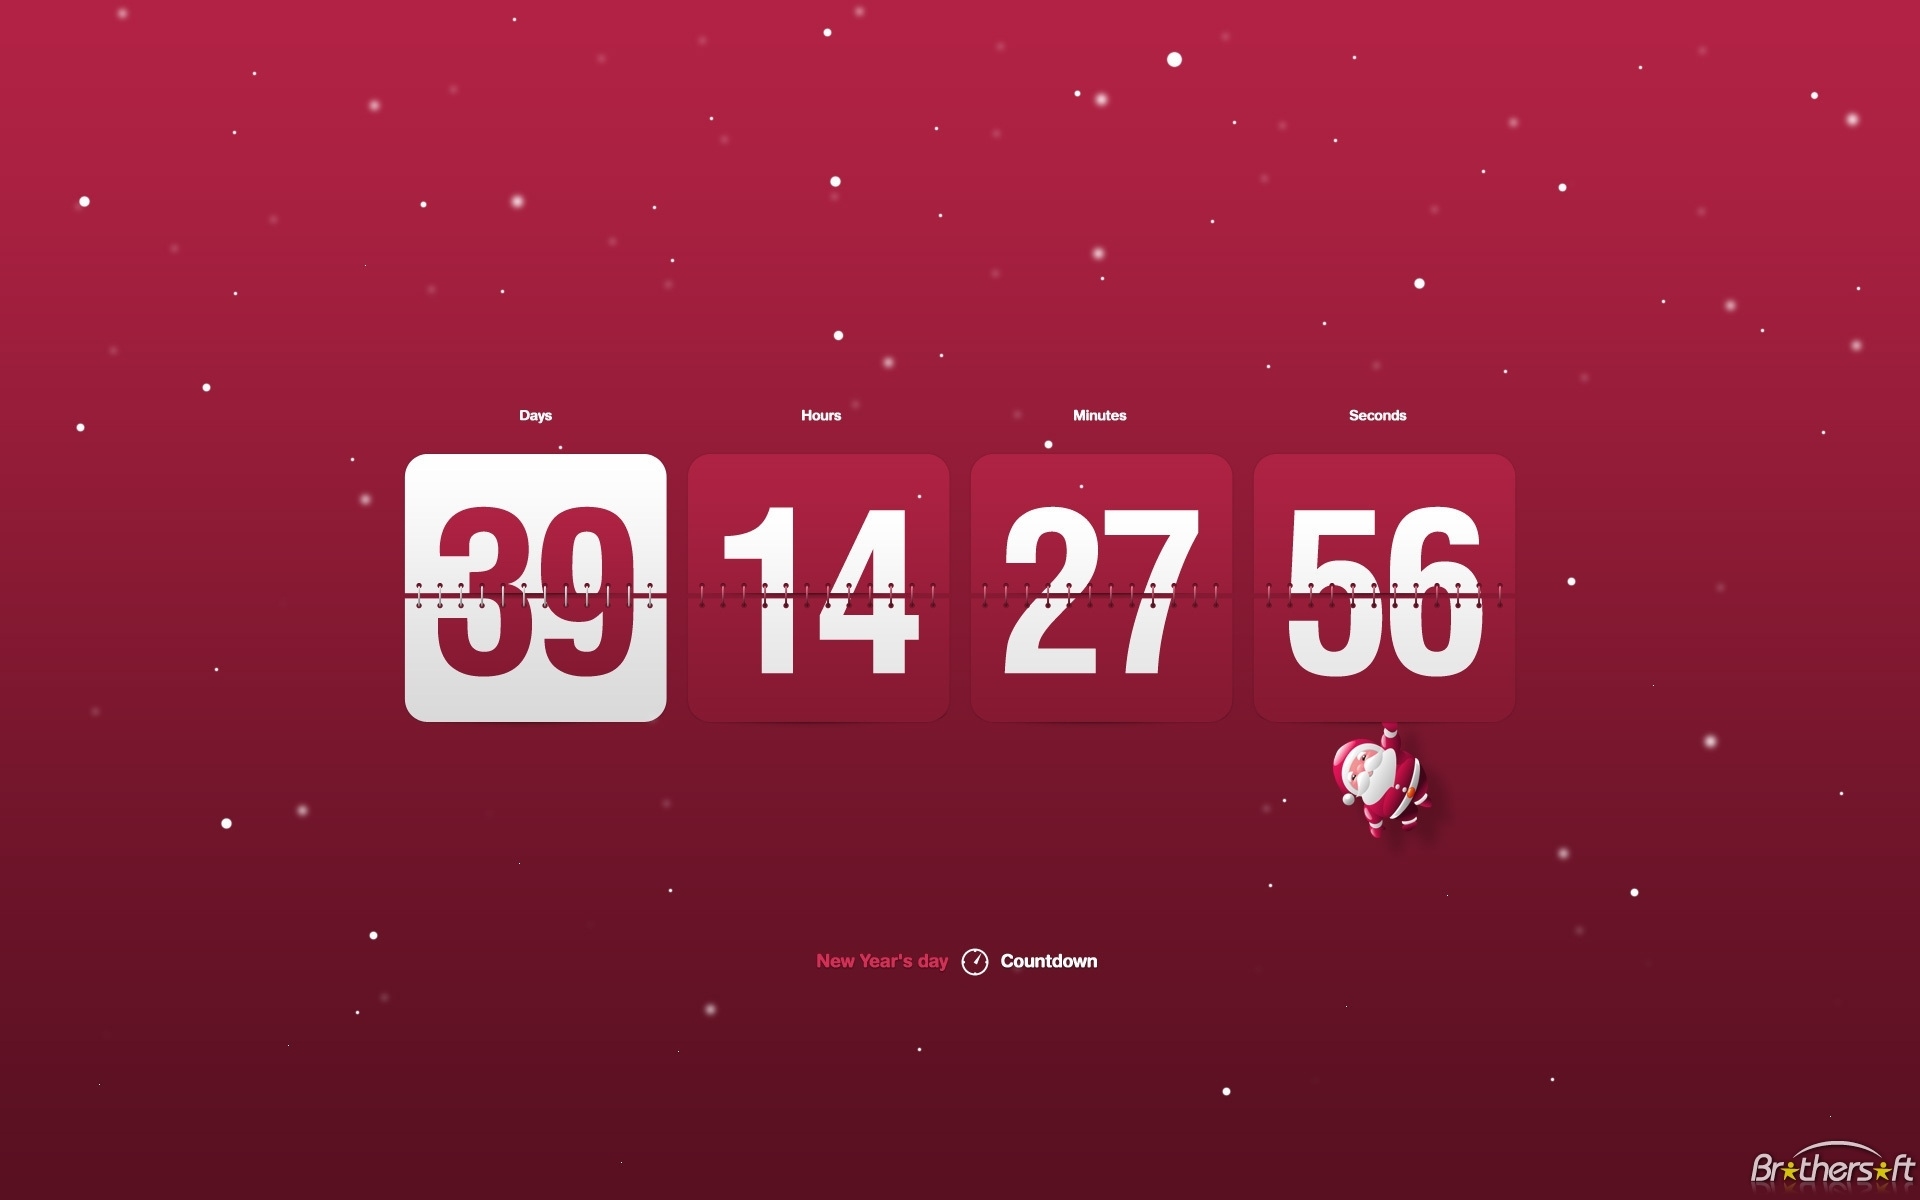 24274 Wallpaper Countdown Clock Free Exceptional Retirement Countdown Calendar For Desktop